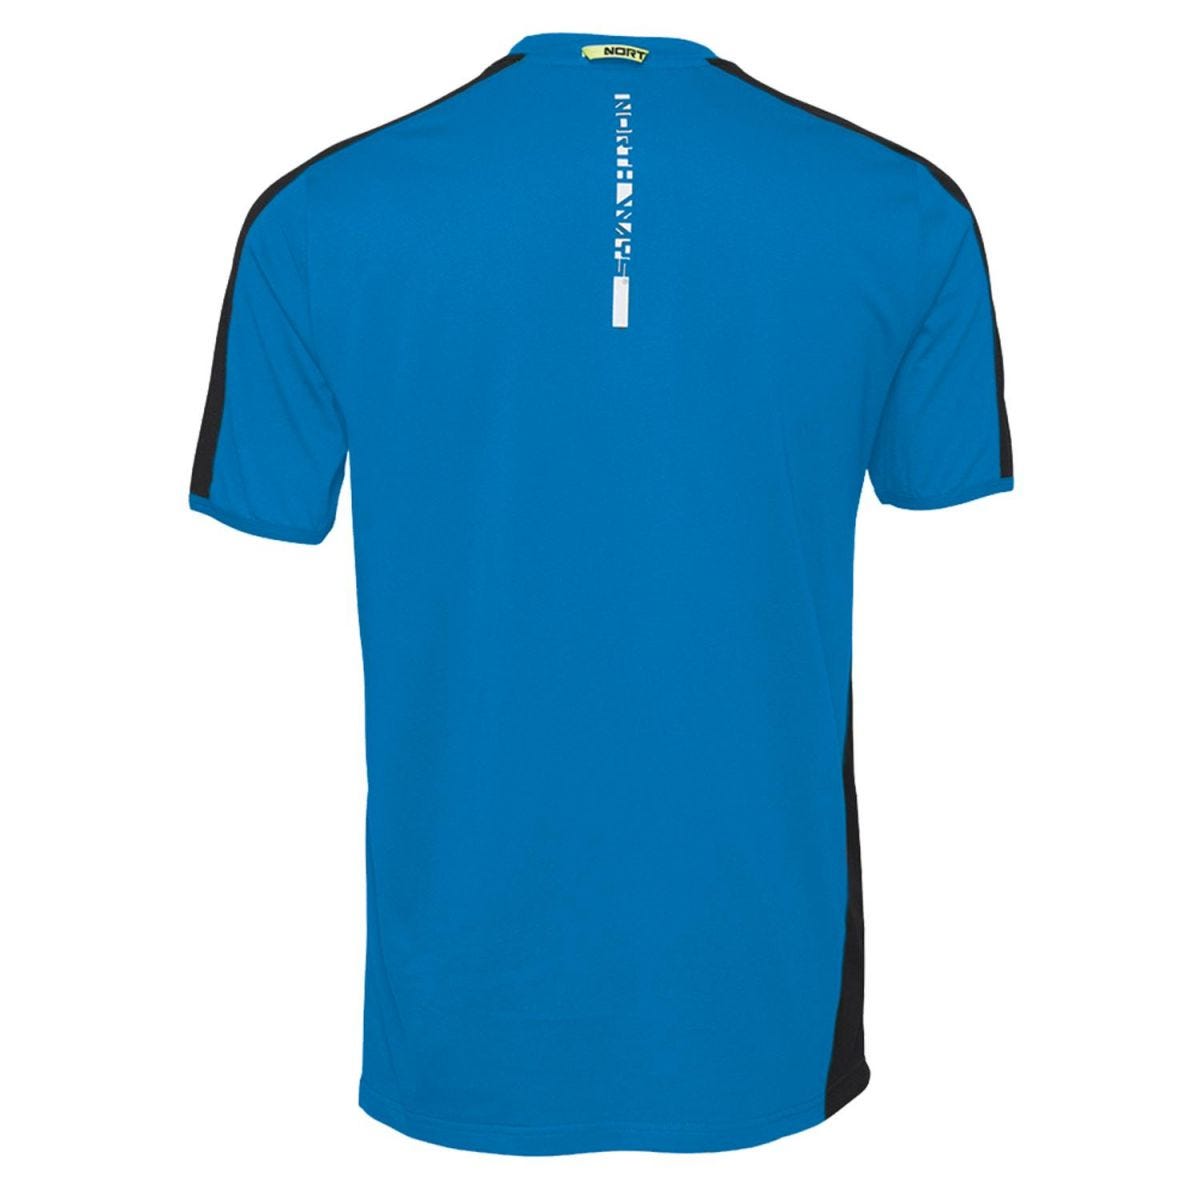 Tee-shirt à manches courtes pour homme Andy bleu - North Ways - Taille XL 1